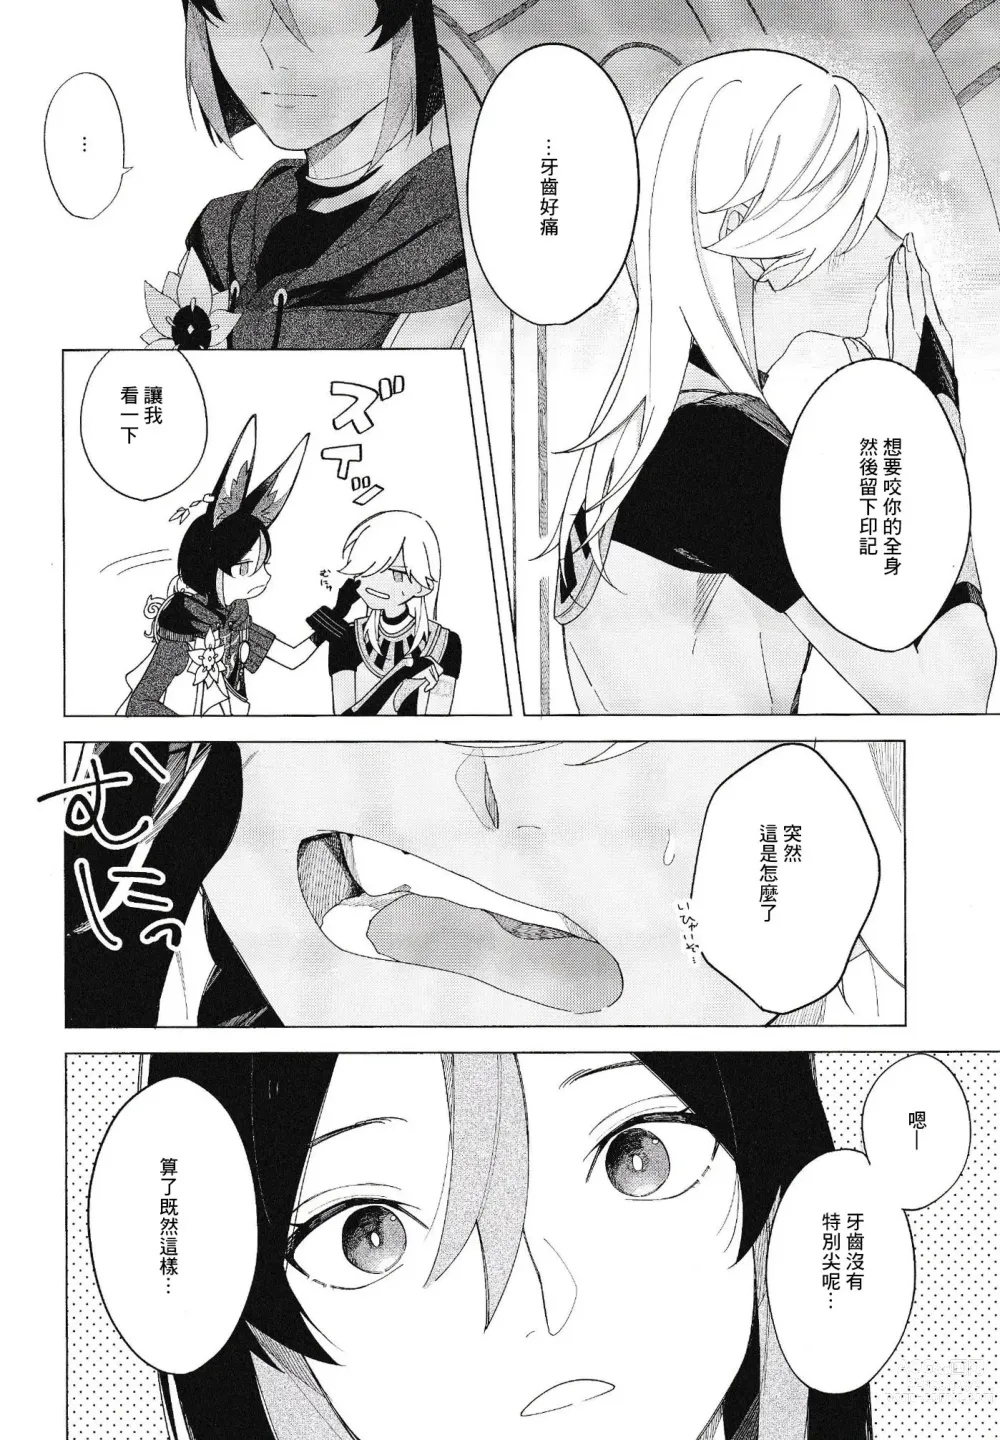 Page 11 of doujinshi 這種咬法沒聽說過啊!